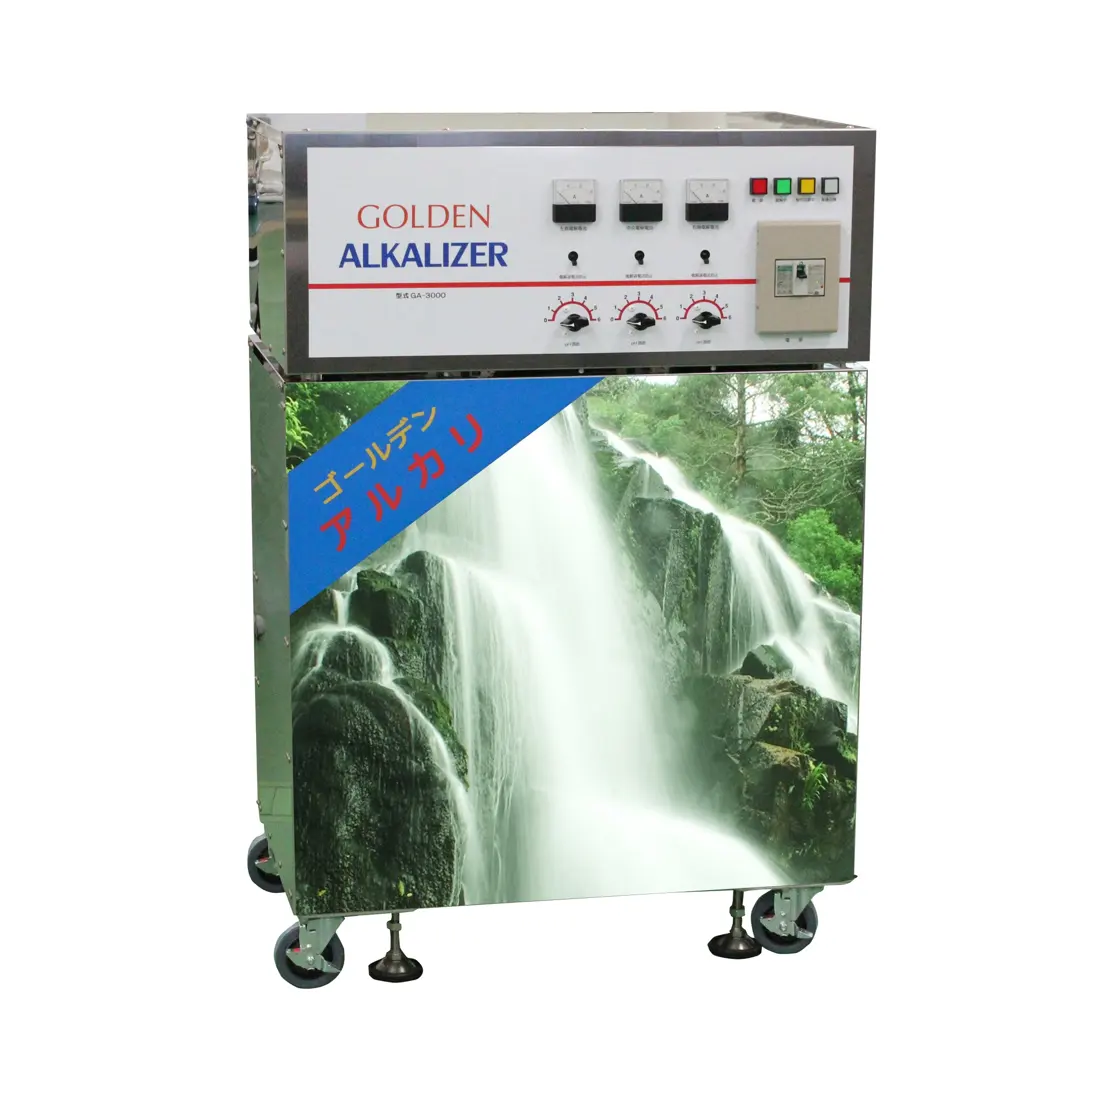 GA-3000 Electrolysis Alkaline Ionizer Advanced Water Ionization Technology Made in Japan